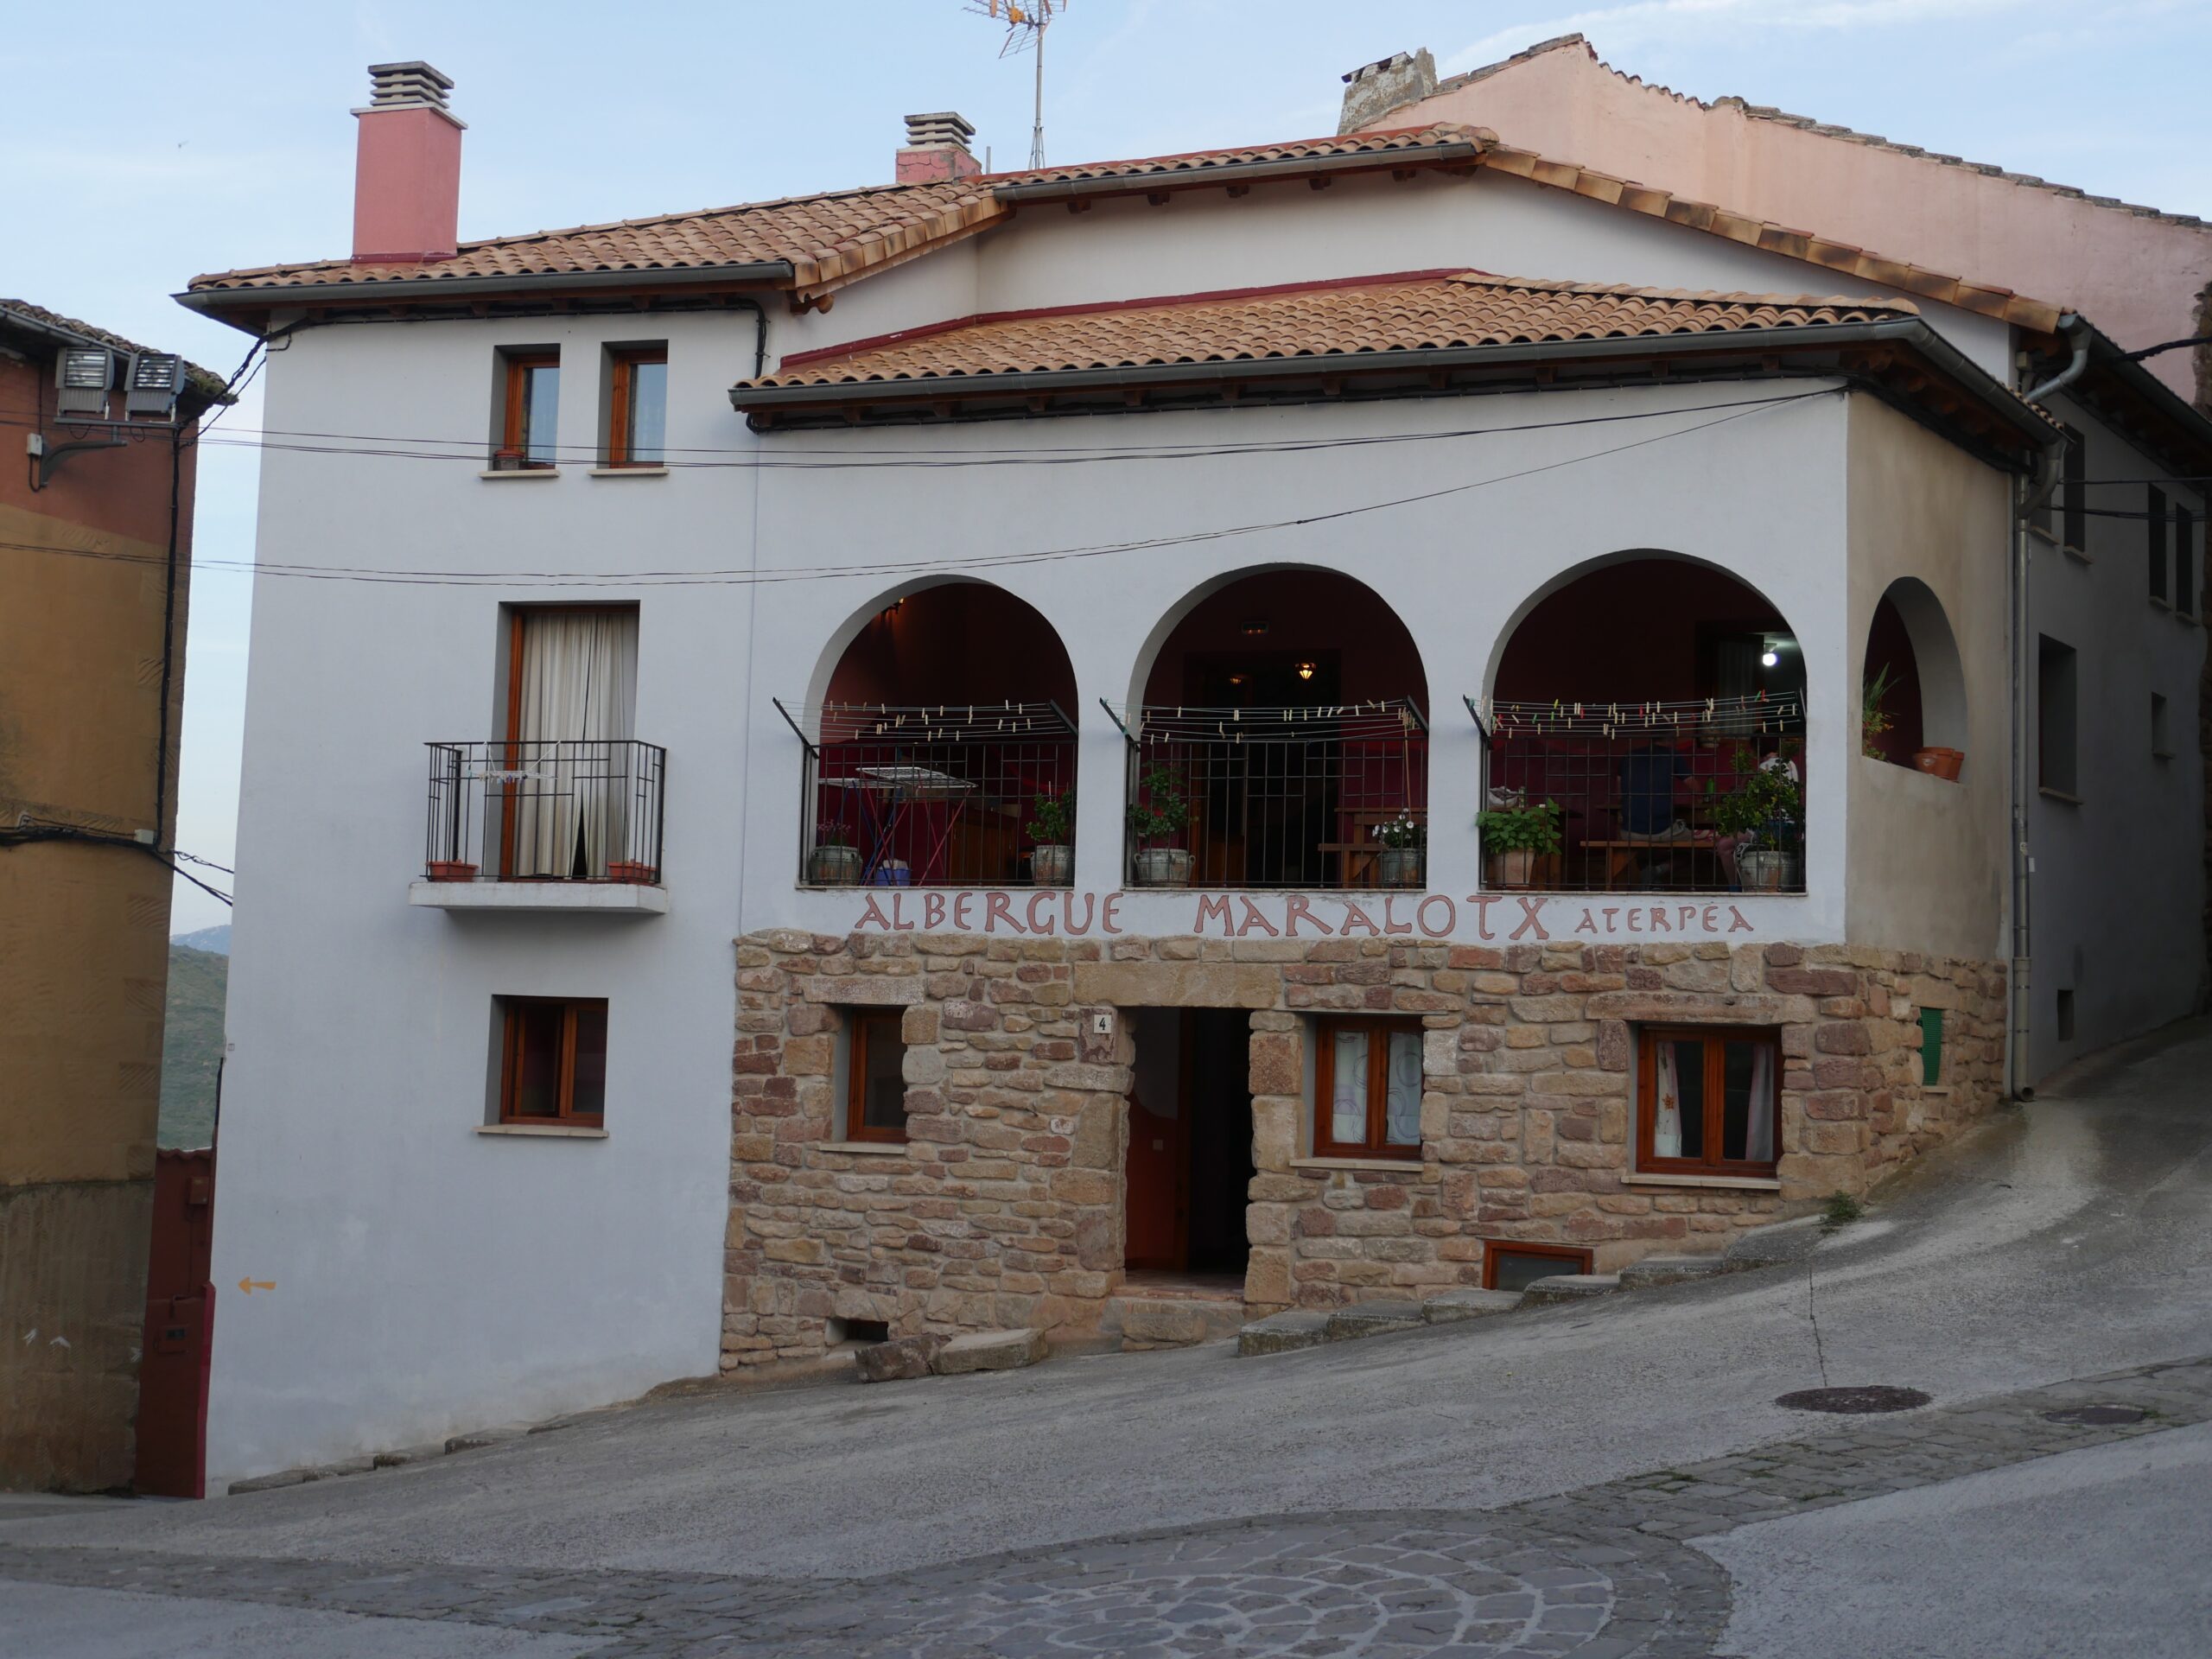 The Maralotx albergue in Cirauqui, Spain has a quaint, elevated patio.